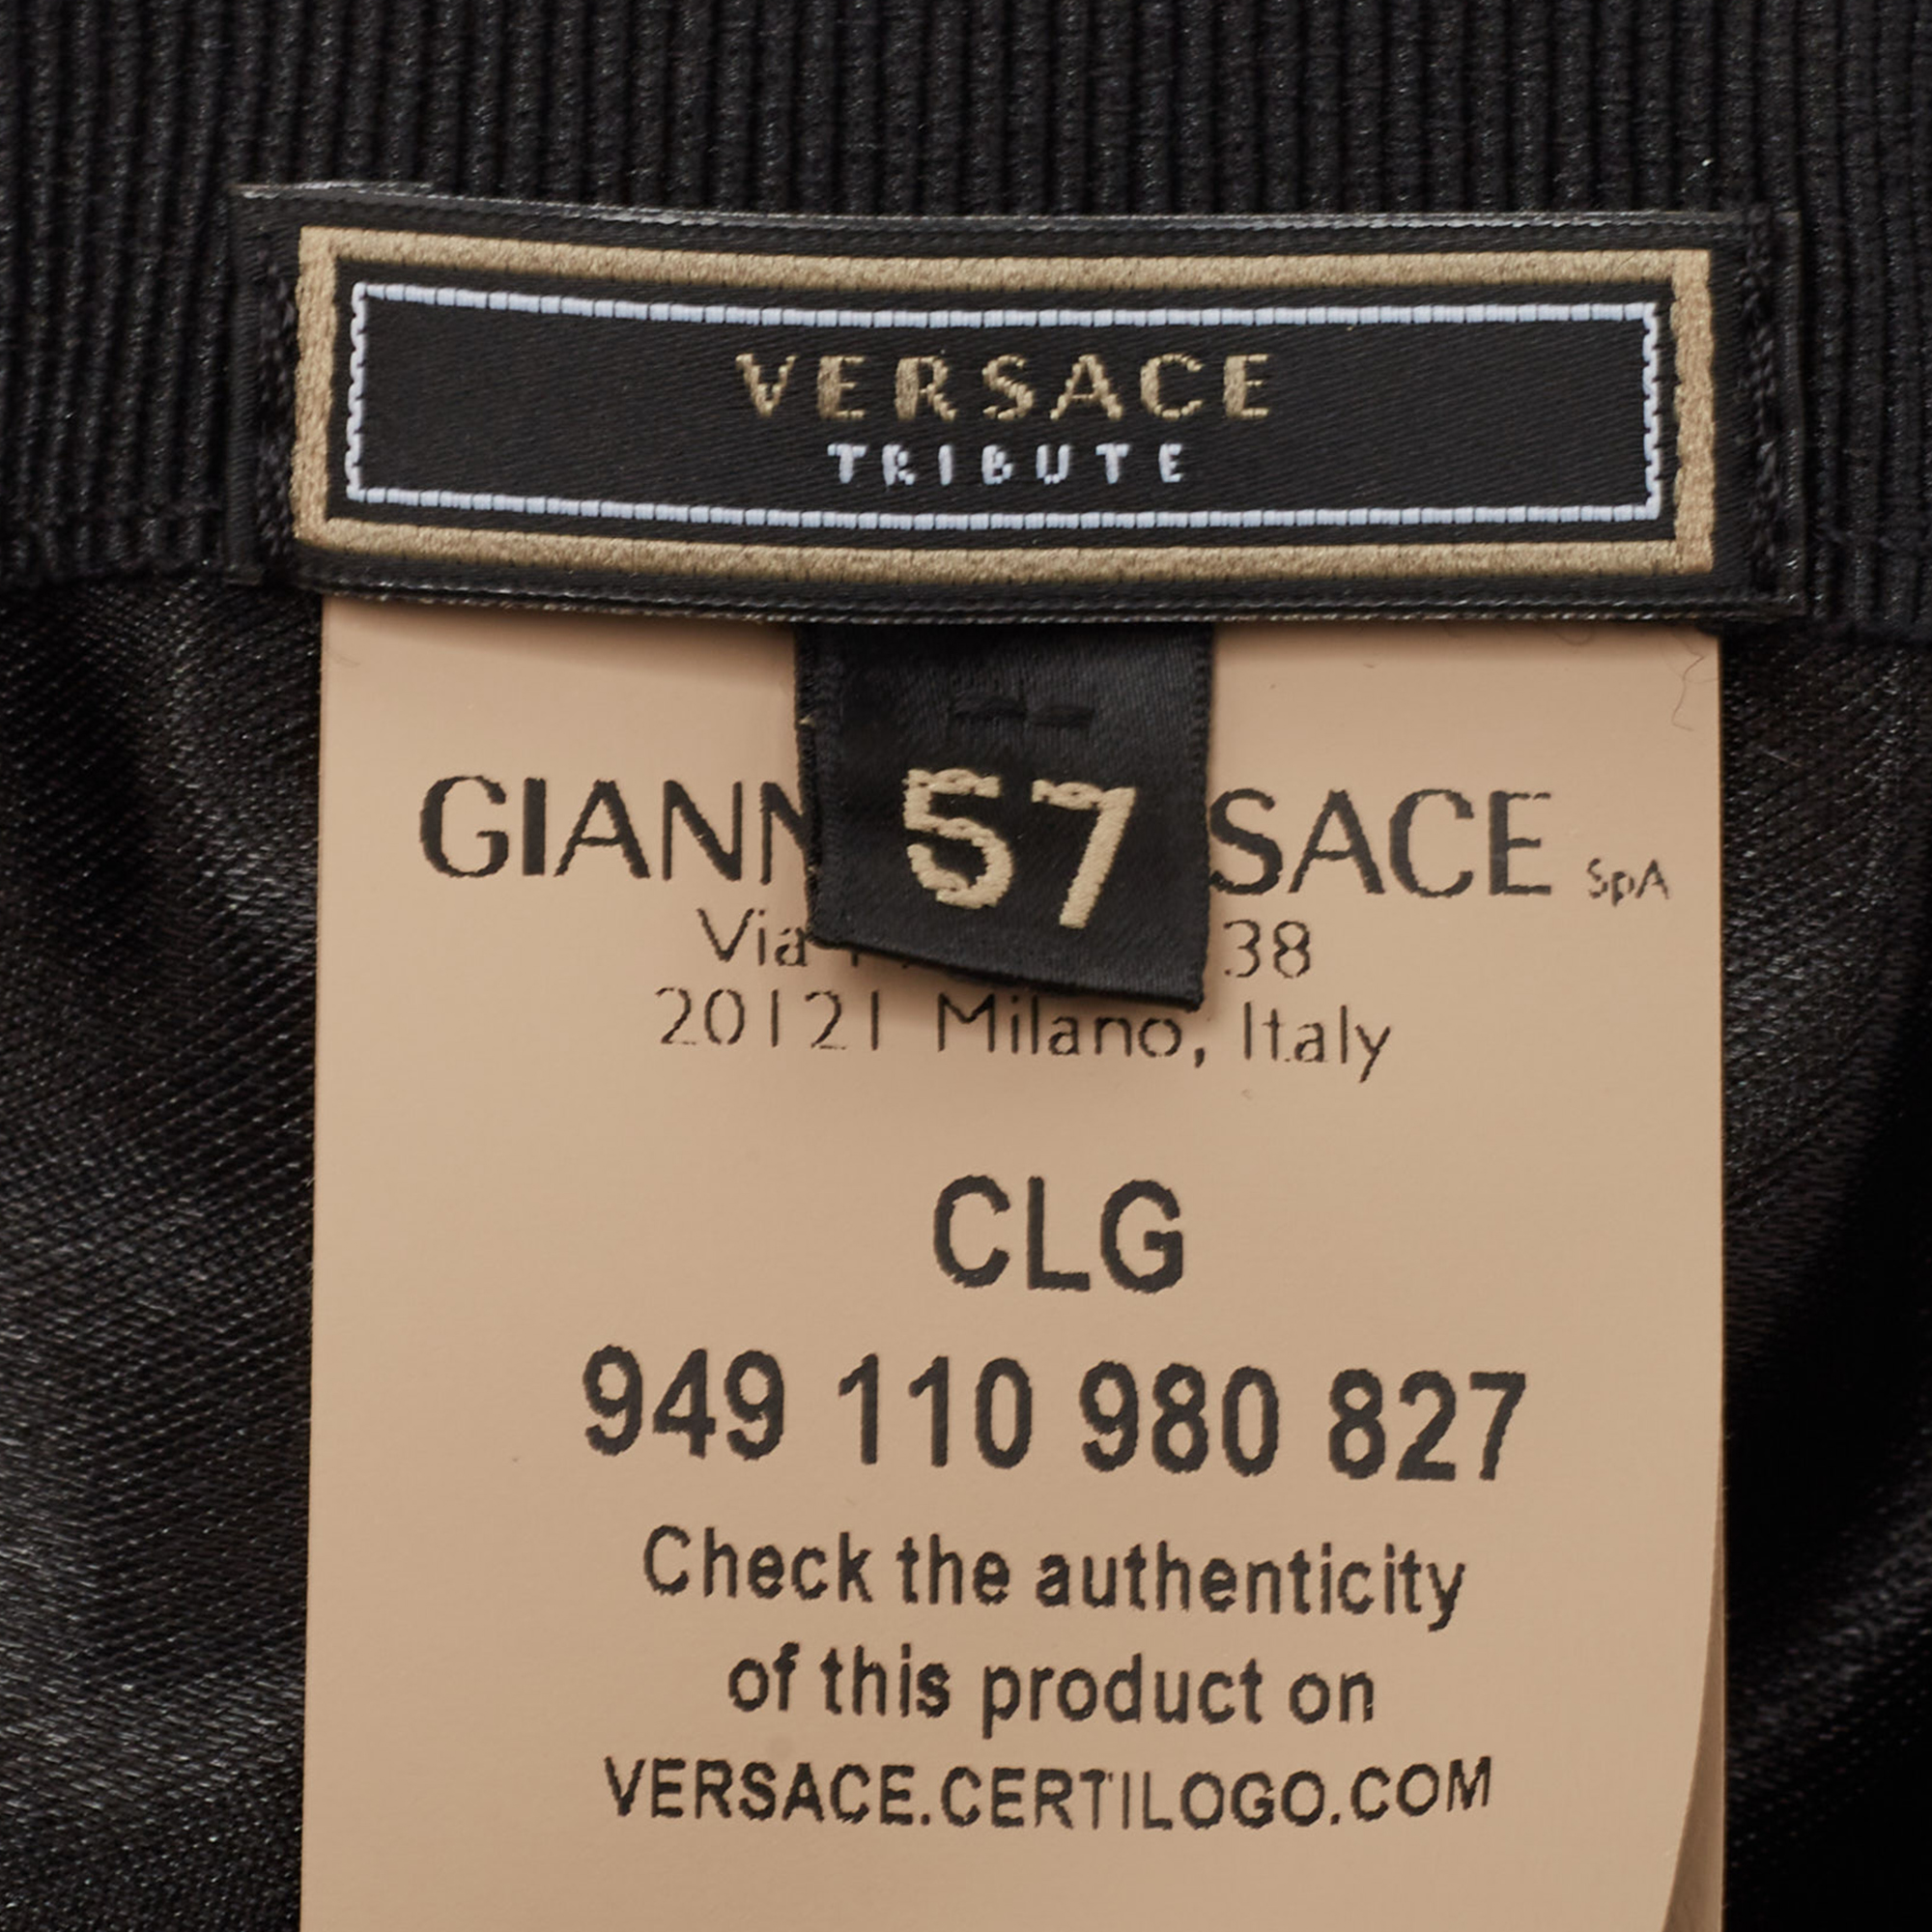 Versace Tribute Black Leather Medusa Medalion Baseball Cap Size 57